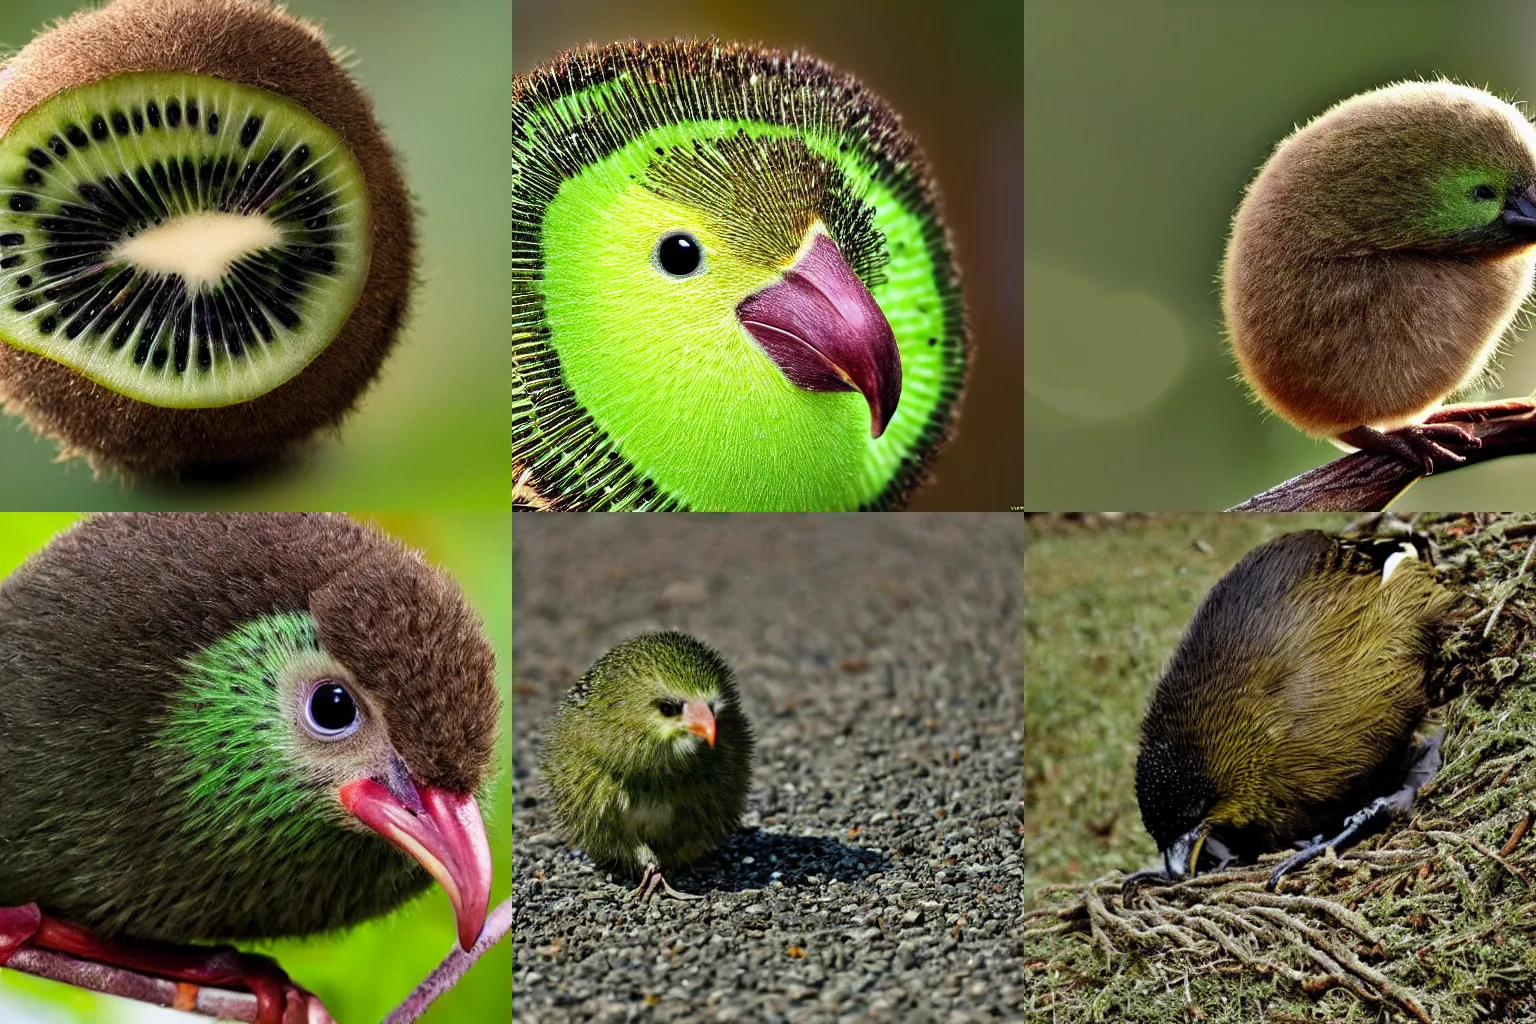 Prompt: kiwi bird that looks like a kiwi fruit photo by suzi eszterhas